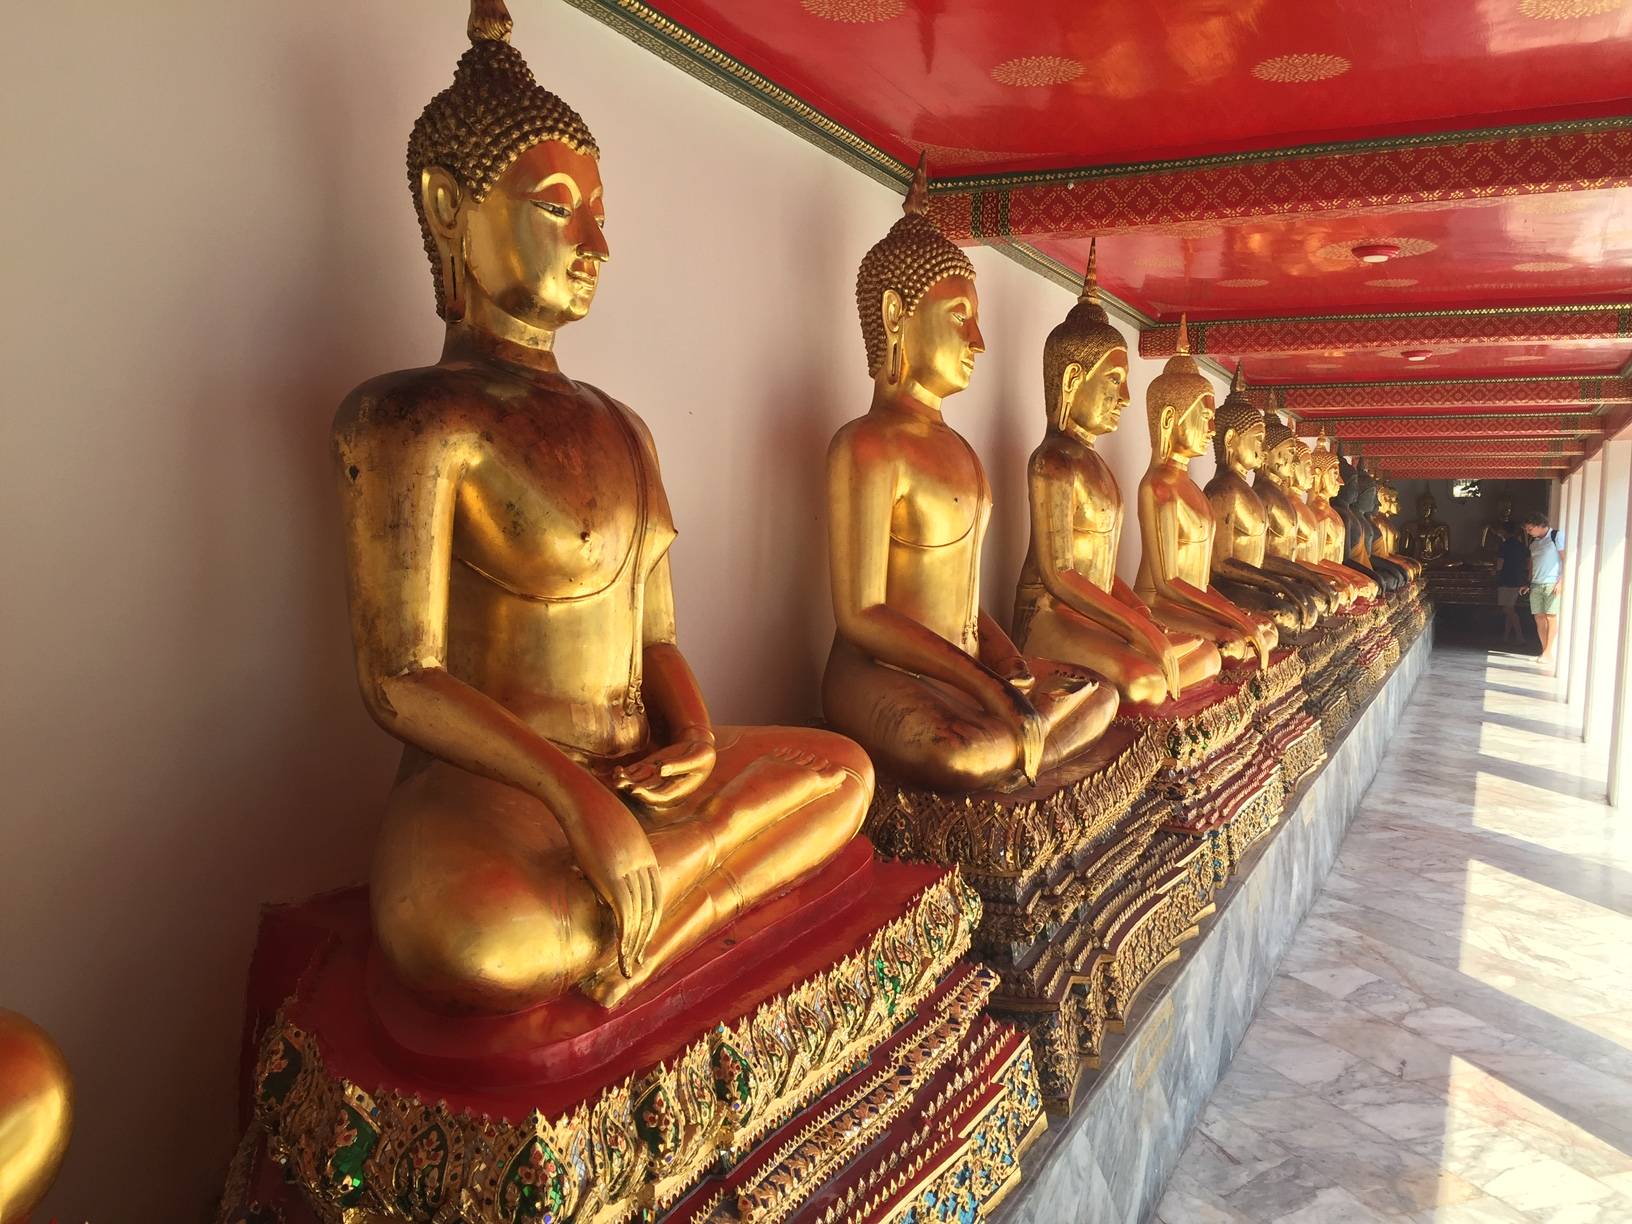 Row of seated Buddha statues